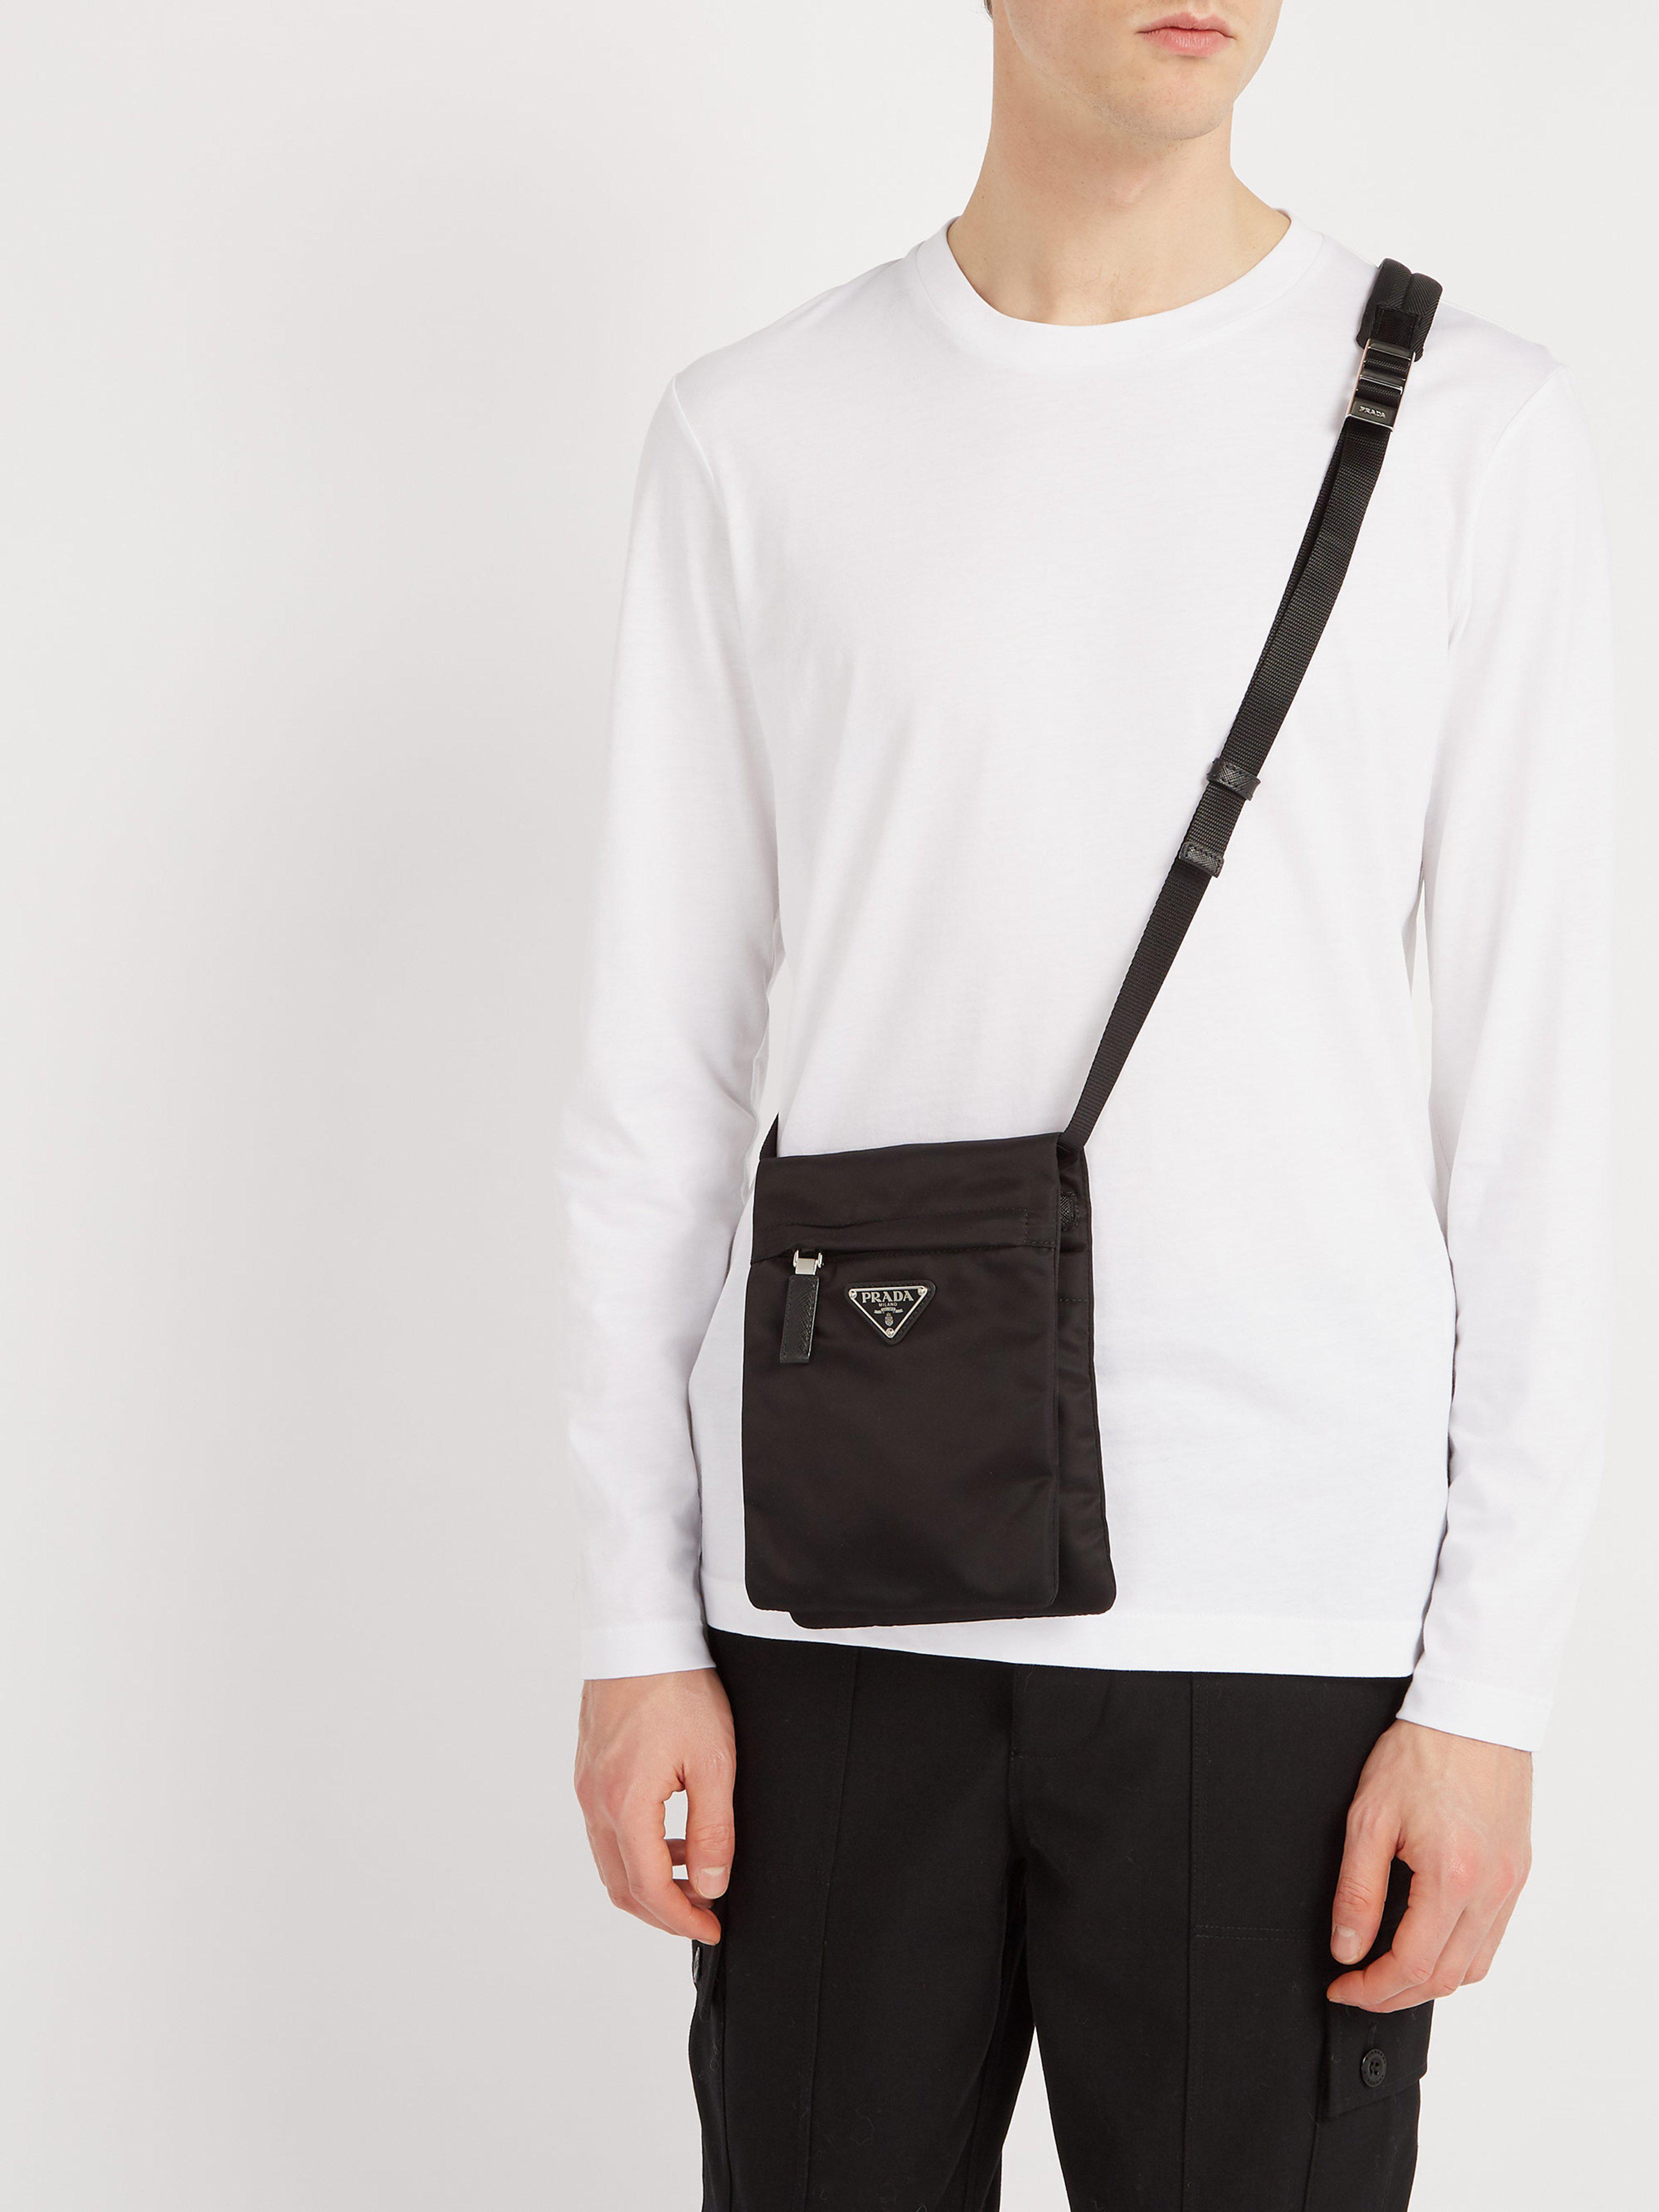 Prada Synthetic Nylon Cross Body Bag in Black for Men - Lyst